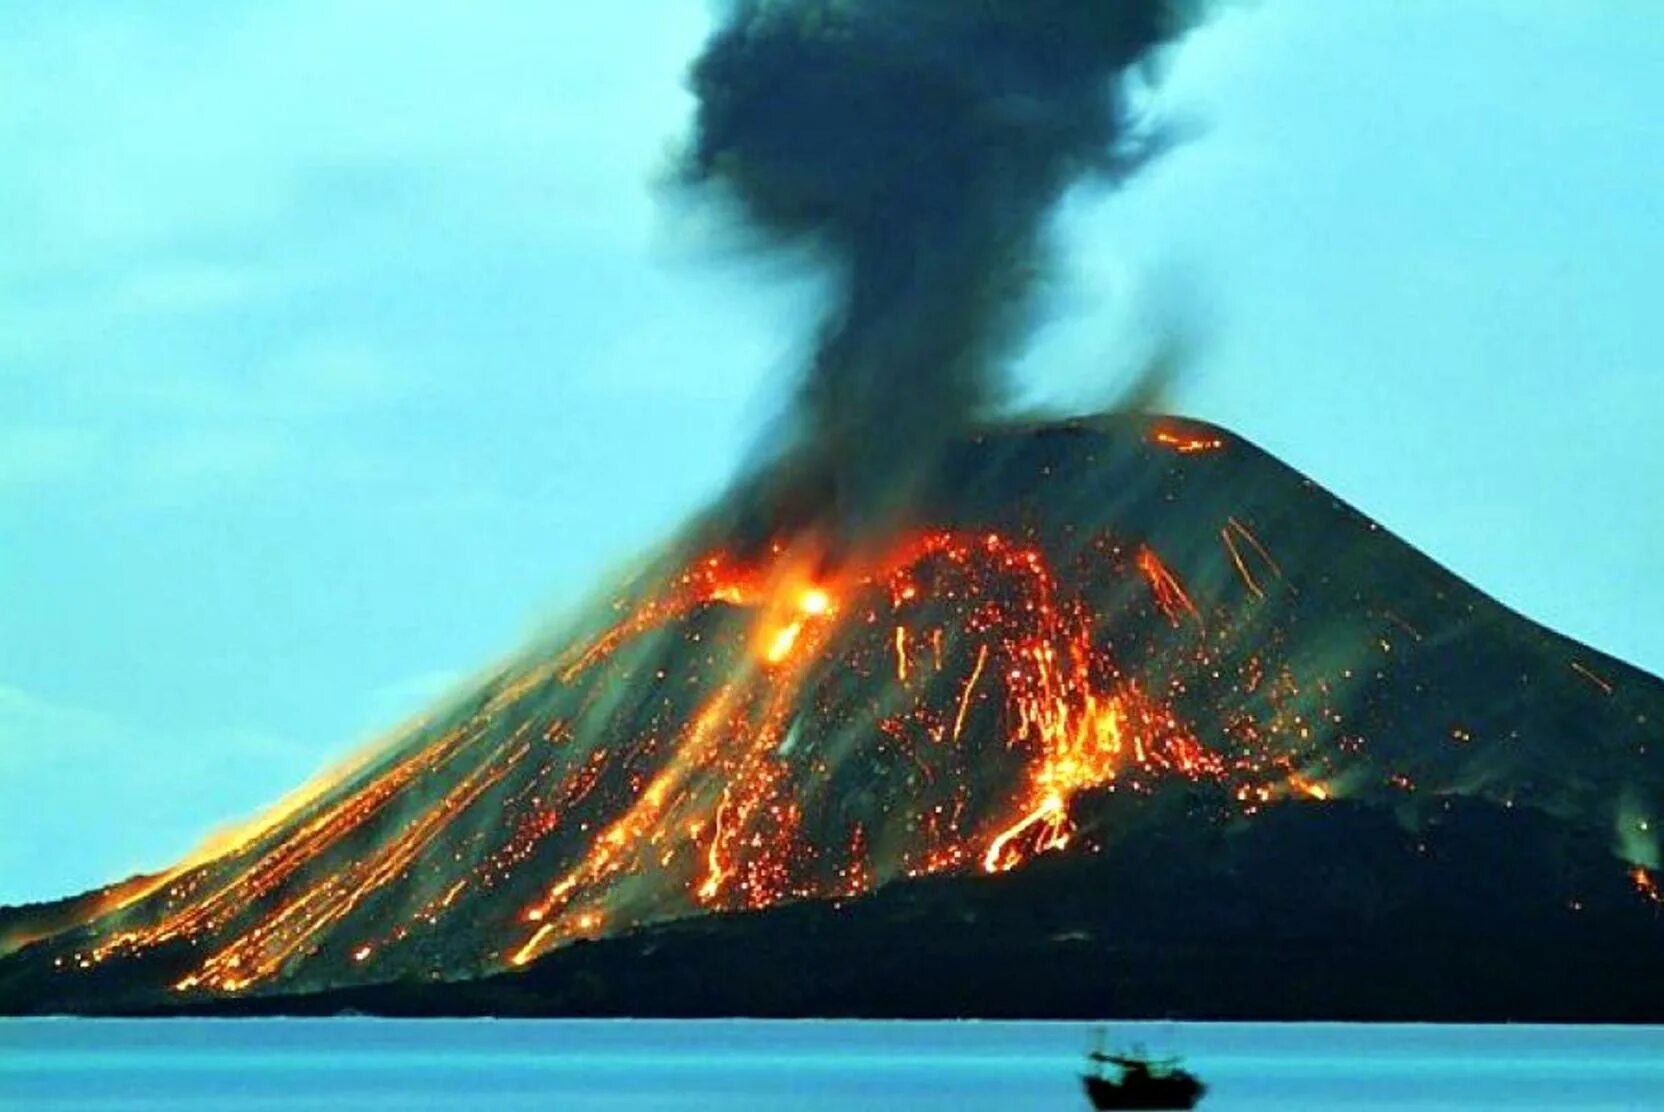 Страна острова вулканы. Индонезия вулкан Кракатау. Извержение вулкана Кракатау в 1883 году. Извержение вулкана Кракатау в Индонезии. Вулкан Кракатау (Индонезия, 1883 год).